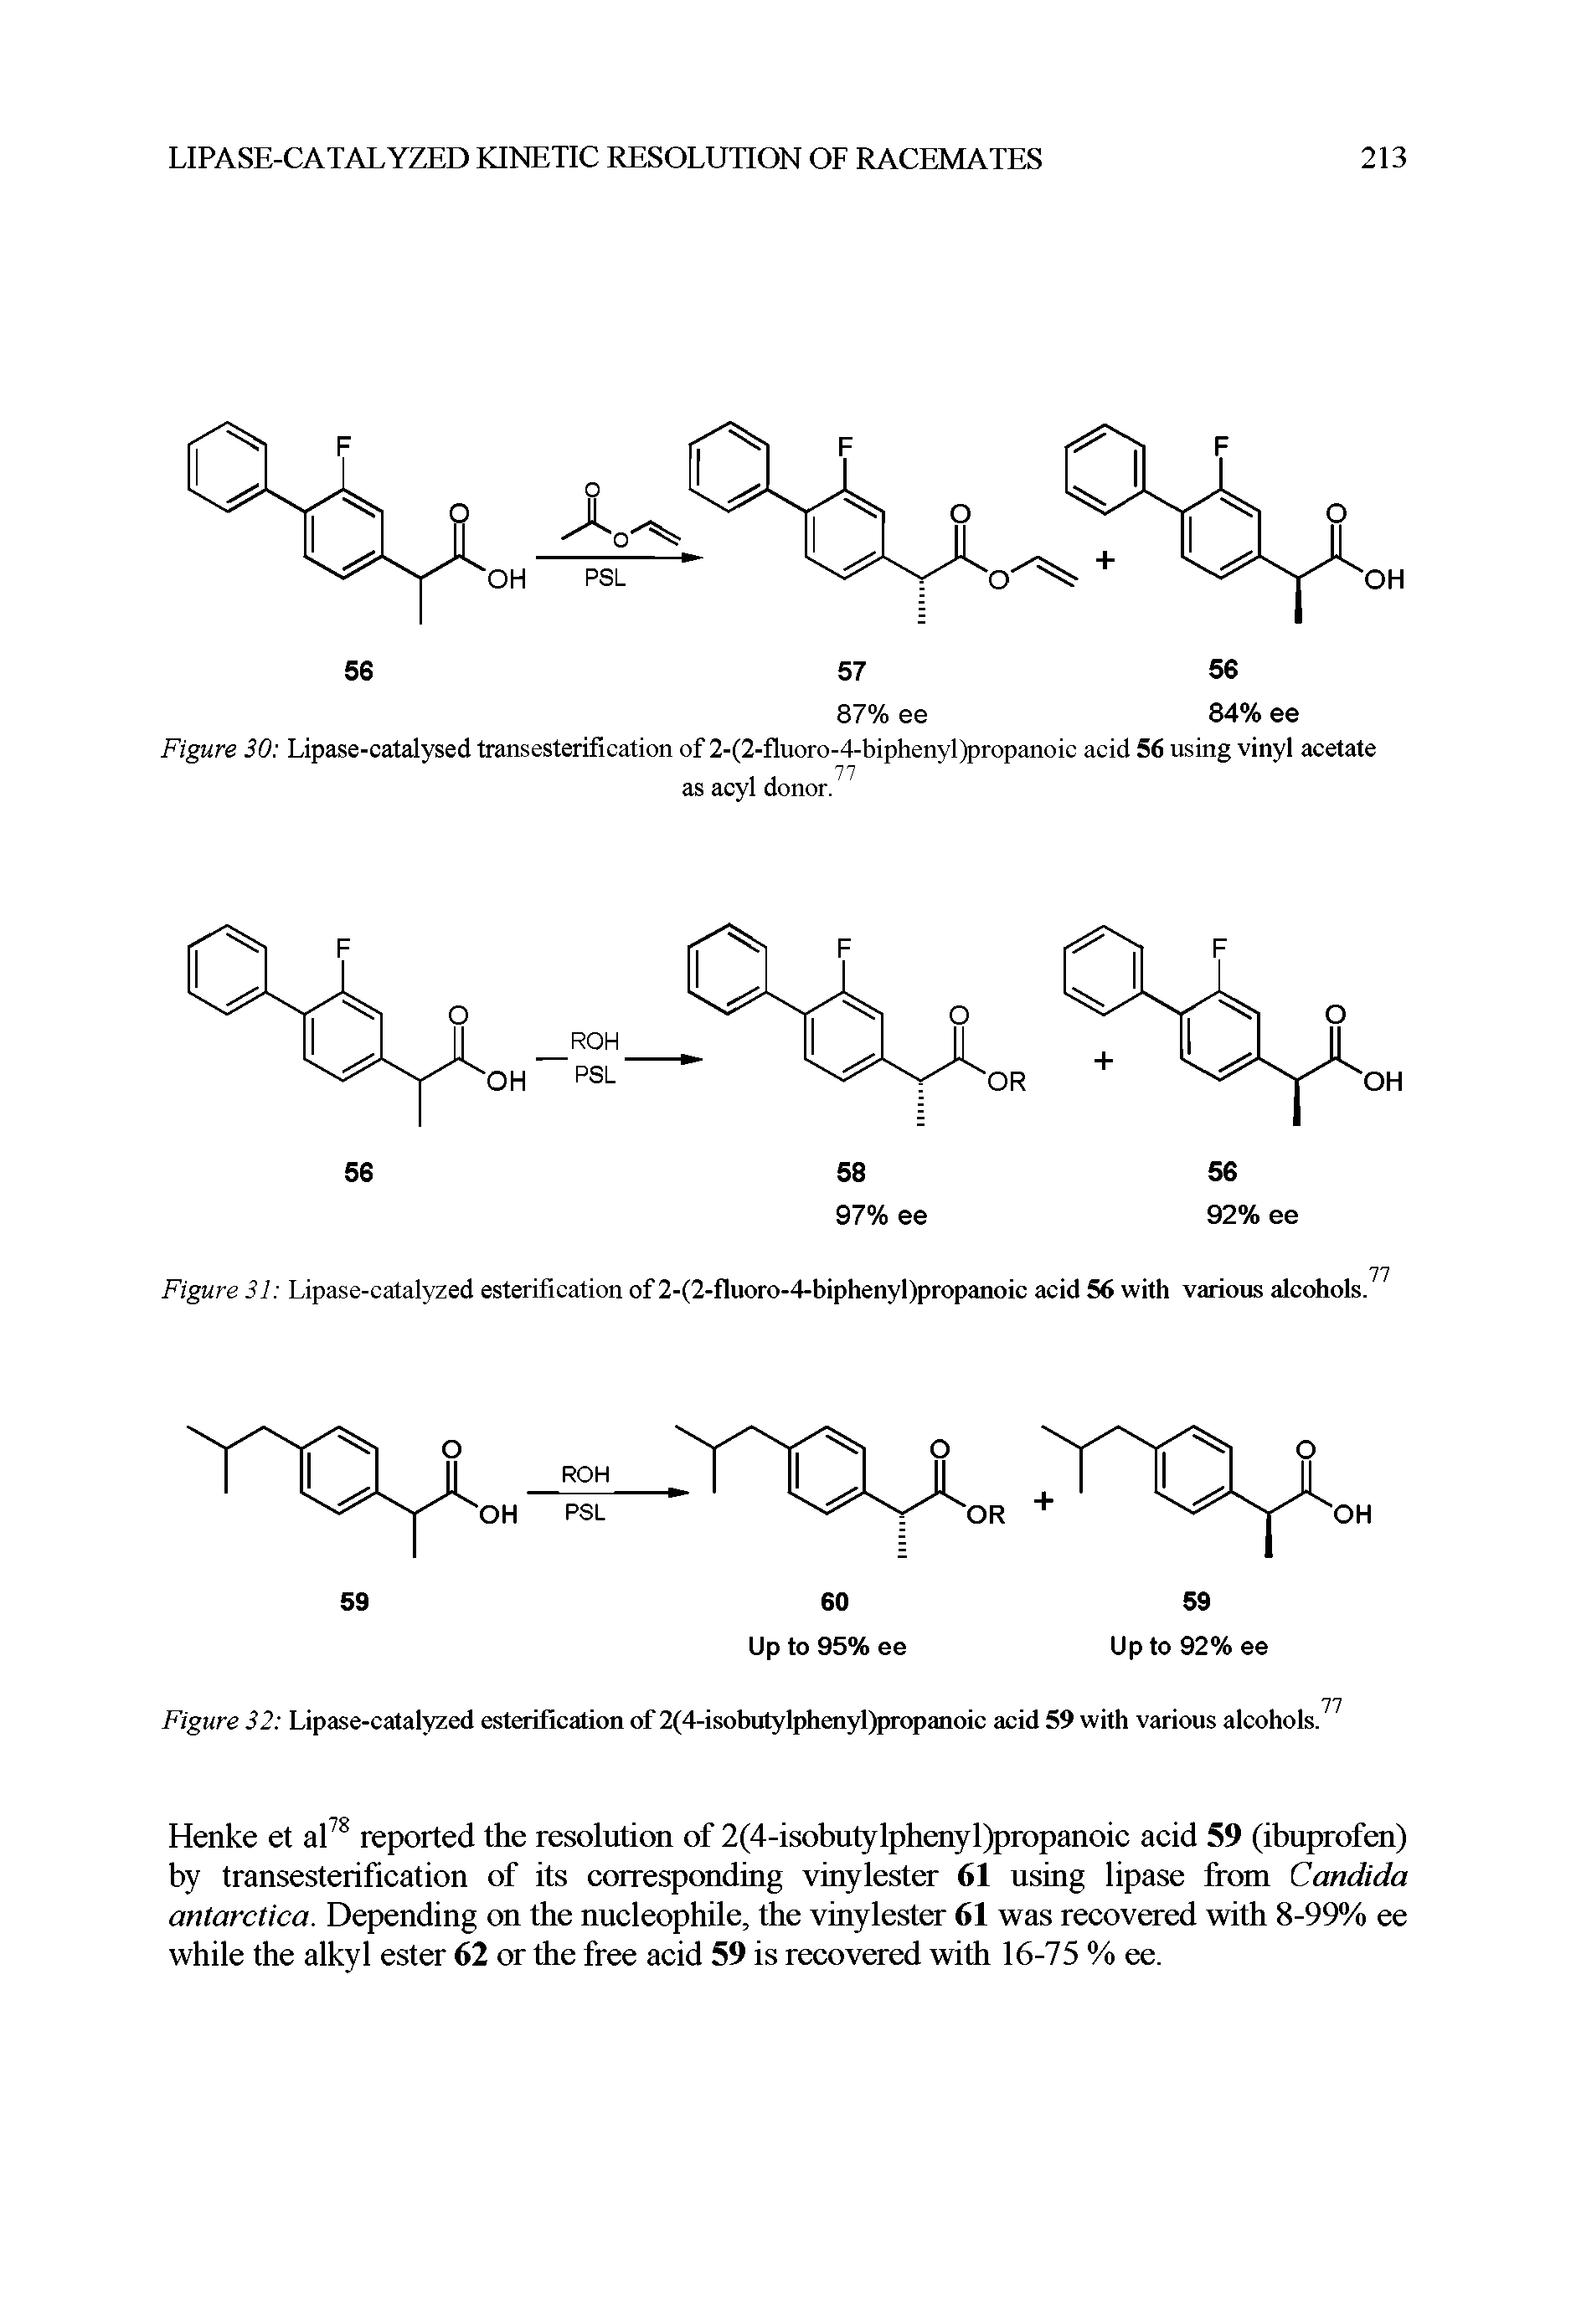 Figure 31 Lipase-catalyzed esterification of 2-(2-fluoro-4-biphenyl)propanoic acid 56 with various alcohols.